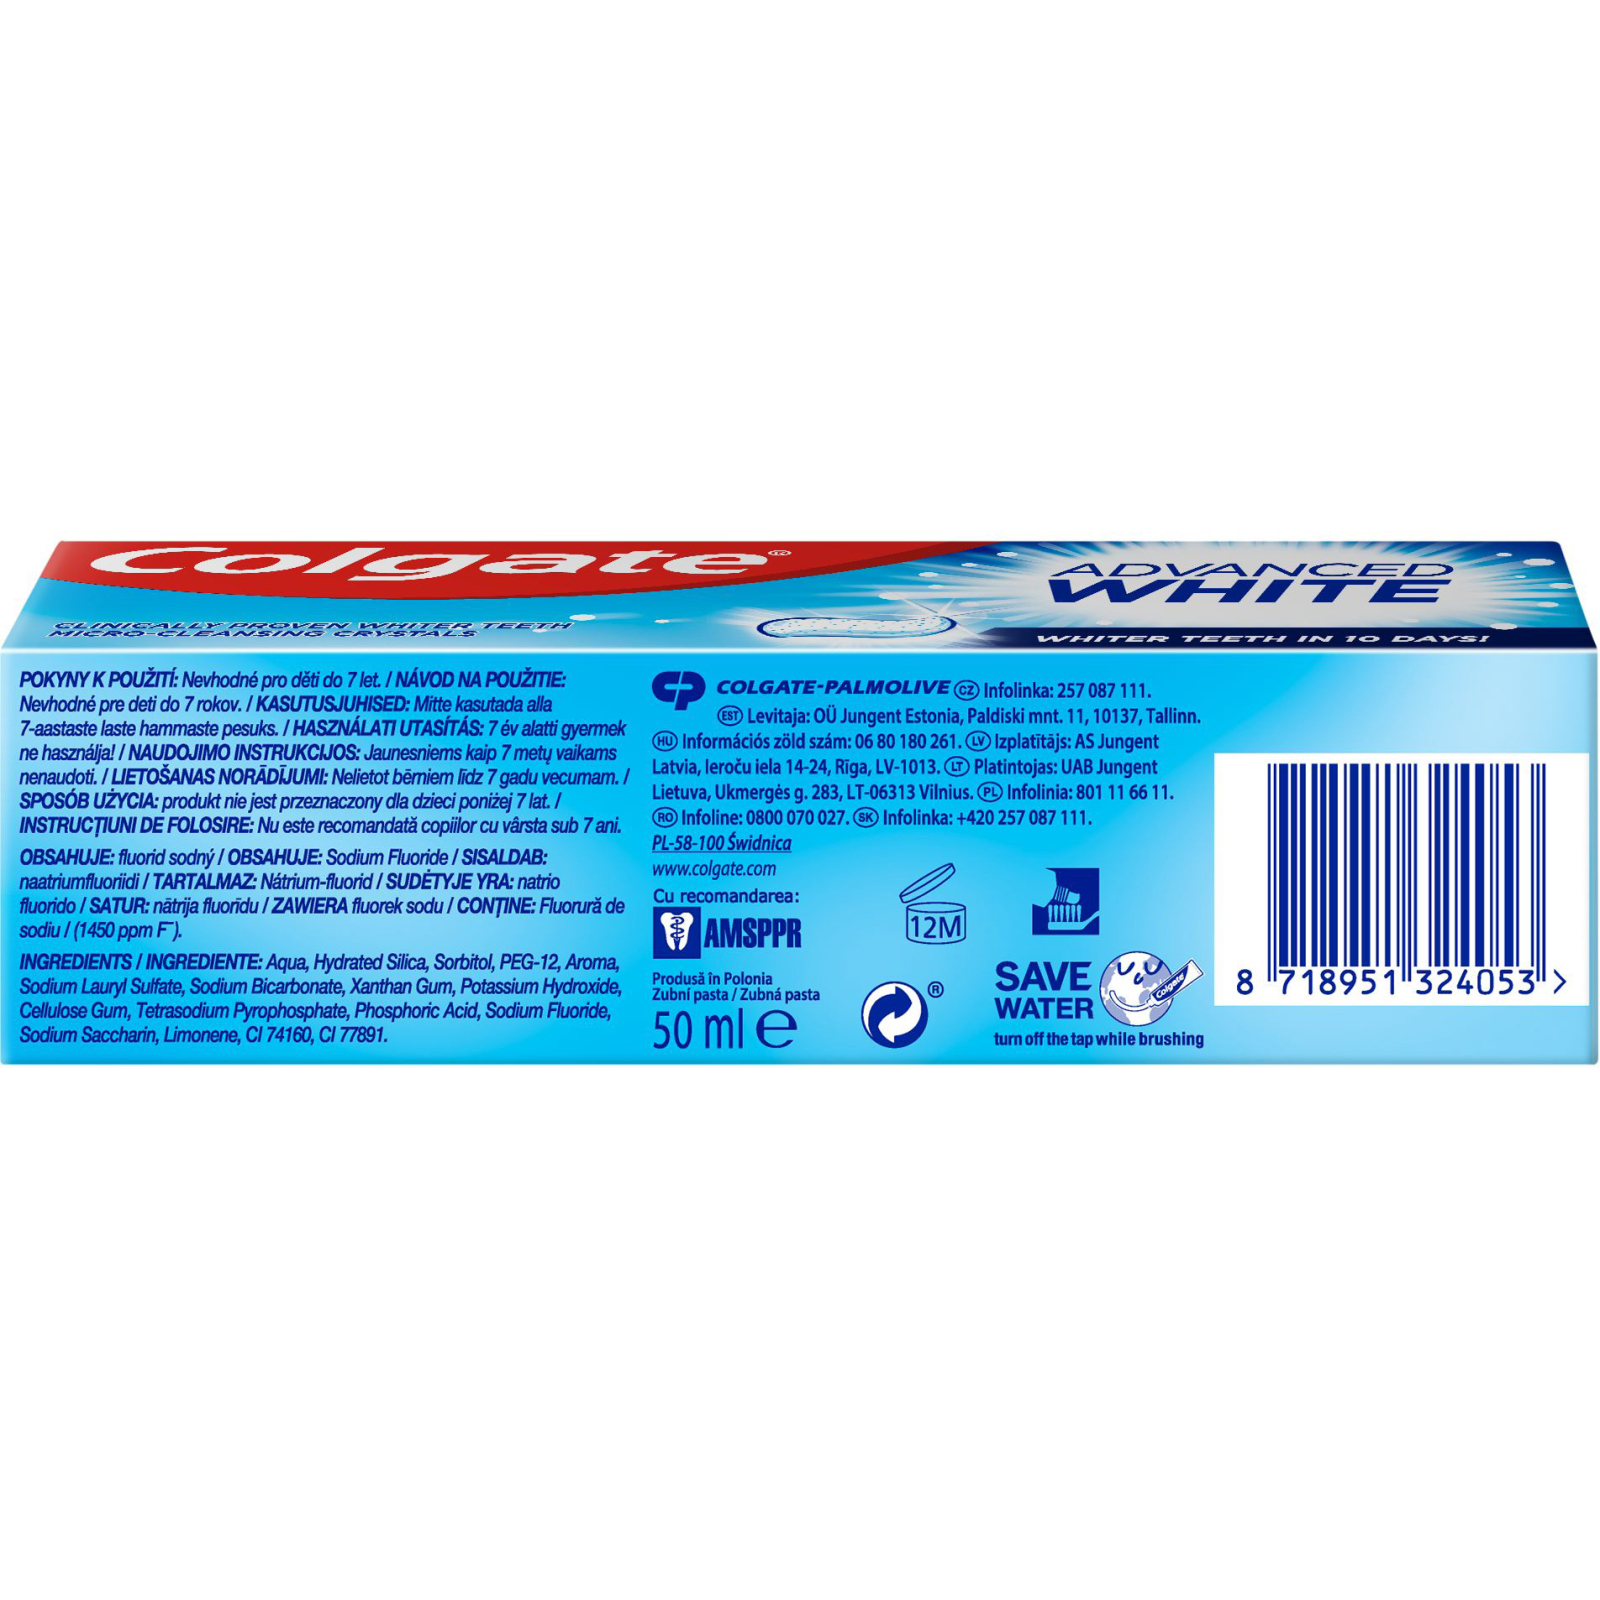 Зубная паста Colgate Advanced White Комплексное отбеливание 50 мл (8718951324053) изображение 3